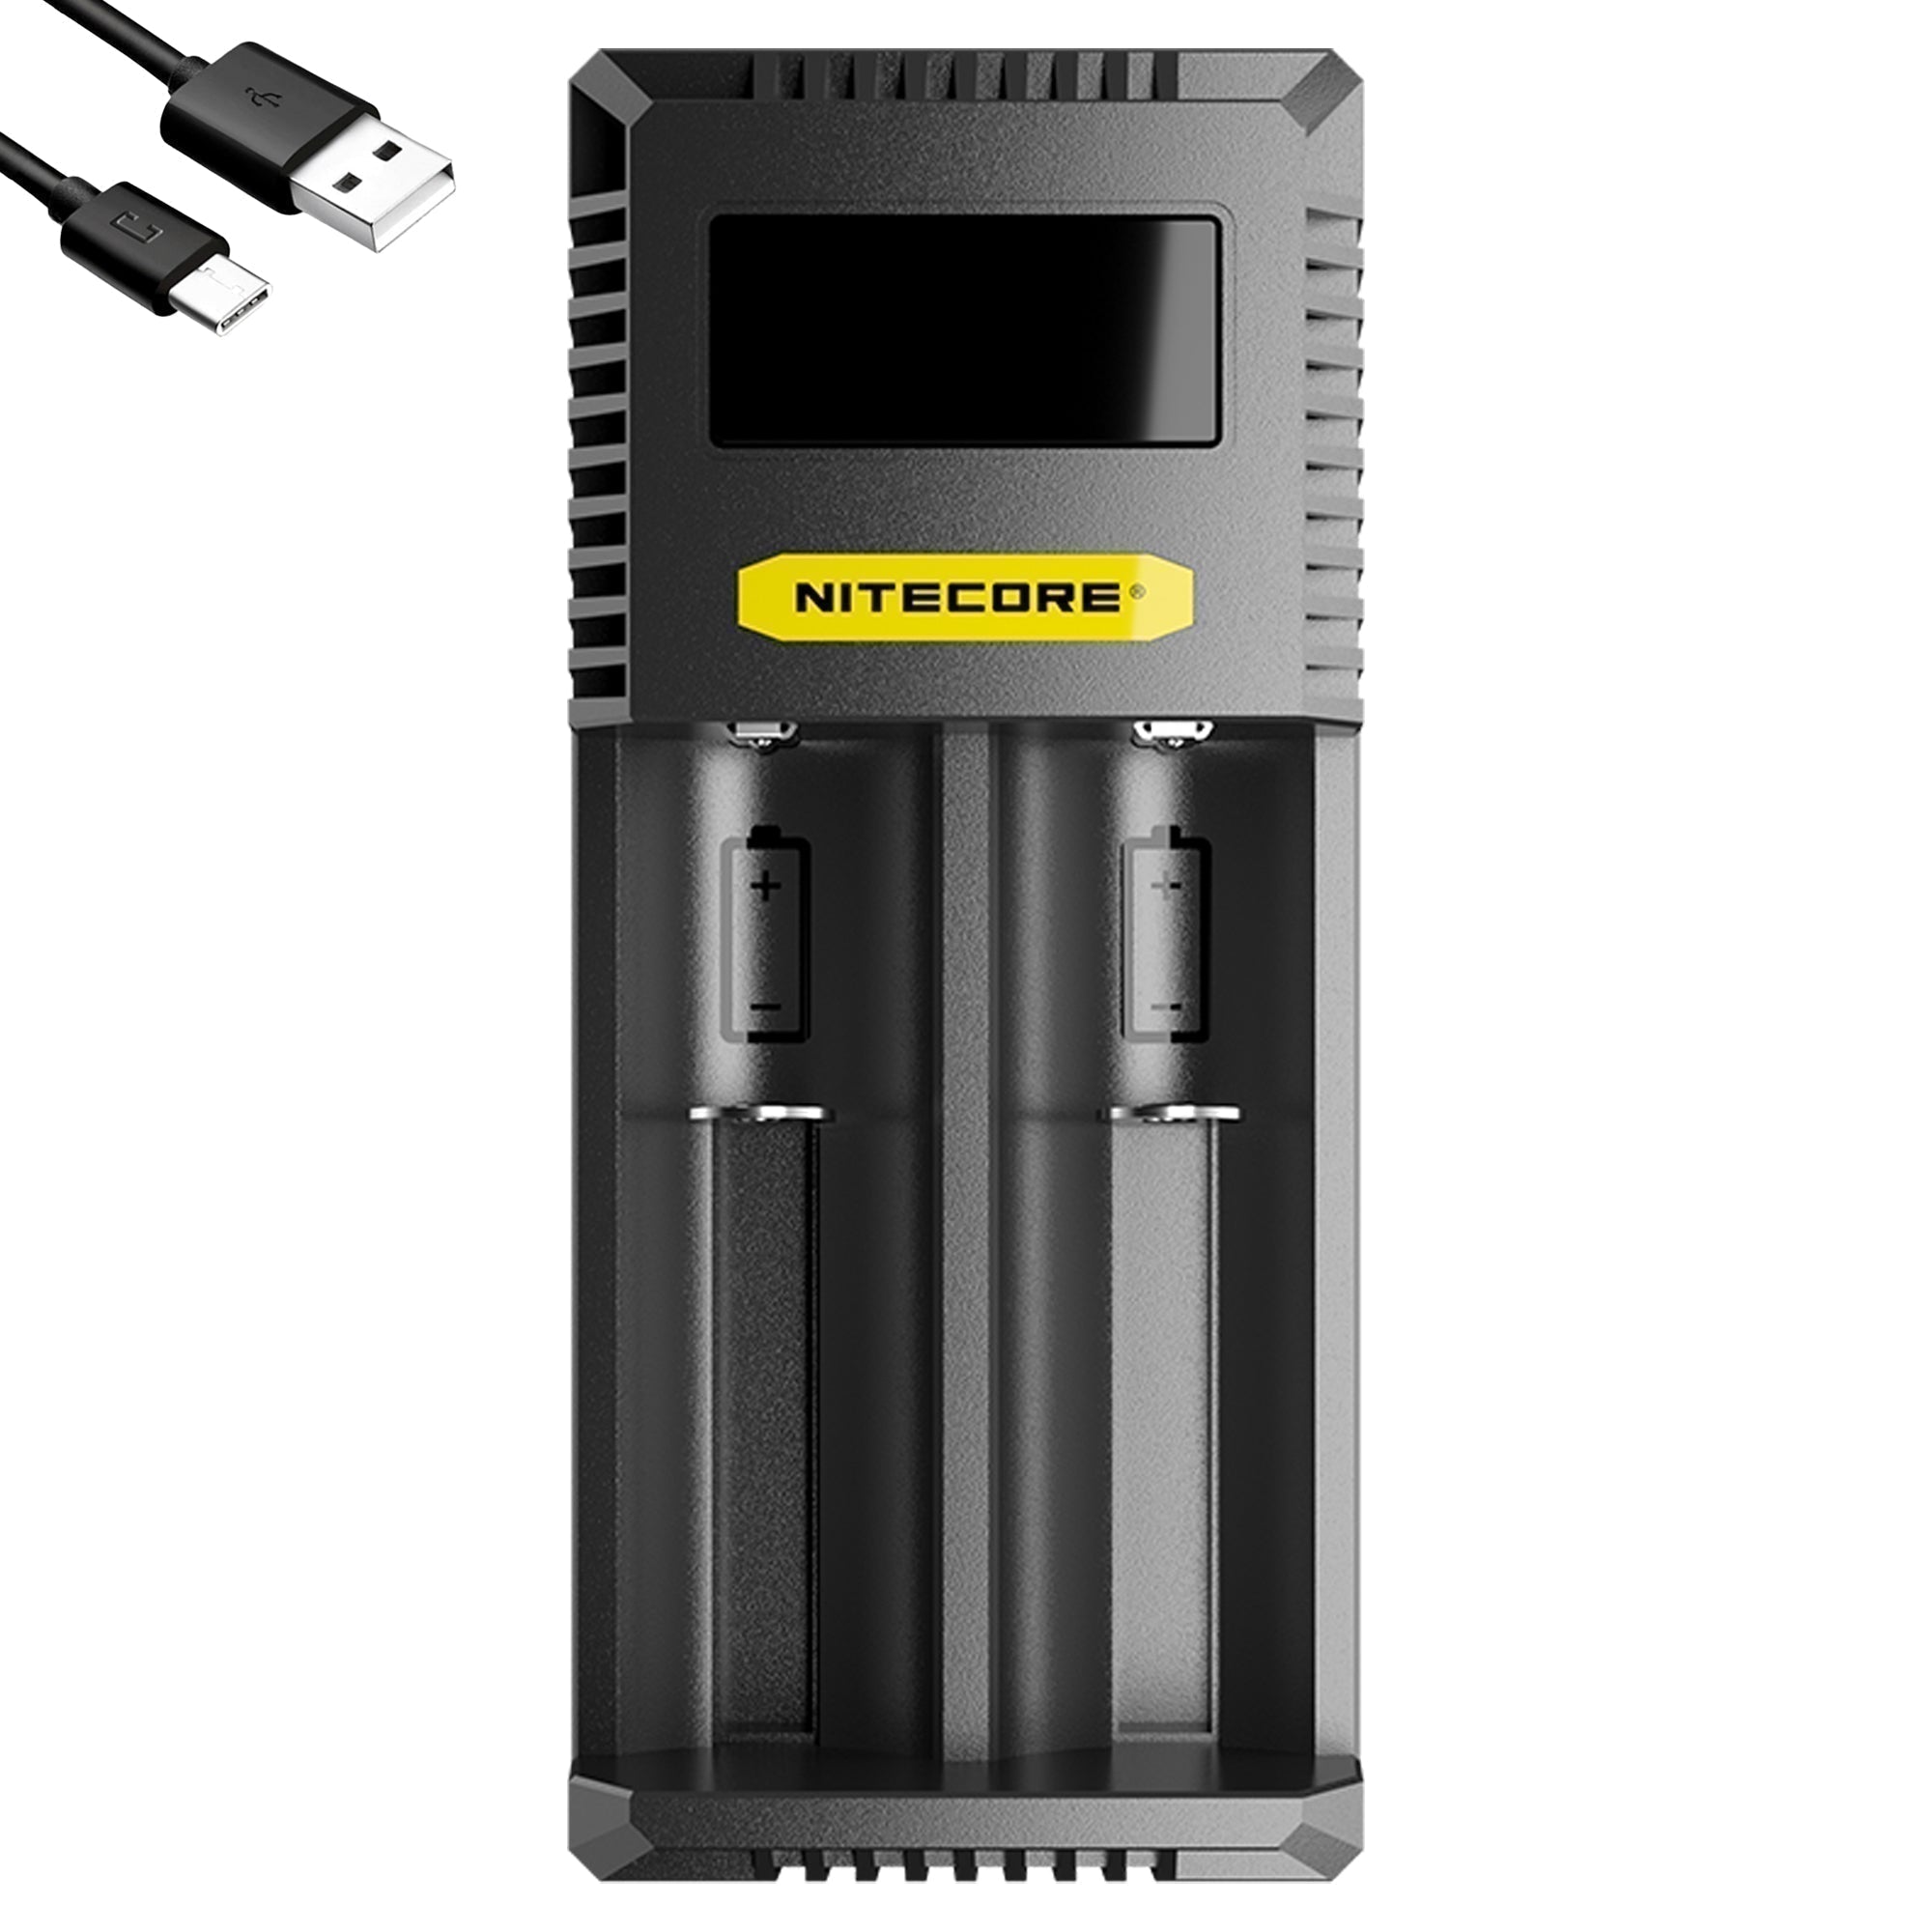 Batteries & Chargers - Nitecore Ci2 Dual Slot Universal Battery Charger (NiCd/NiMH/Li-Ion)